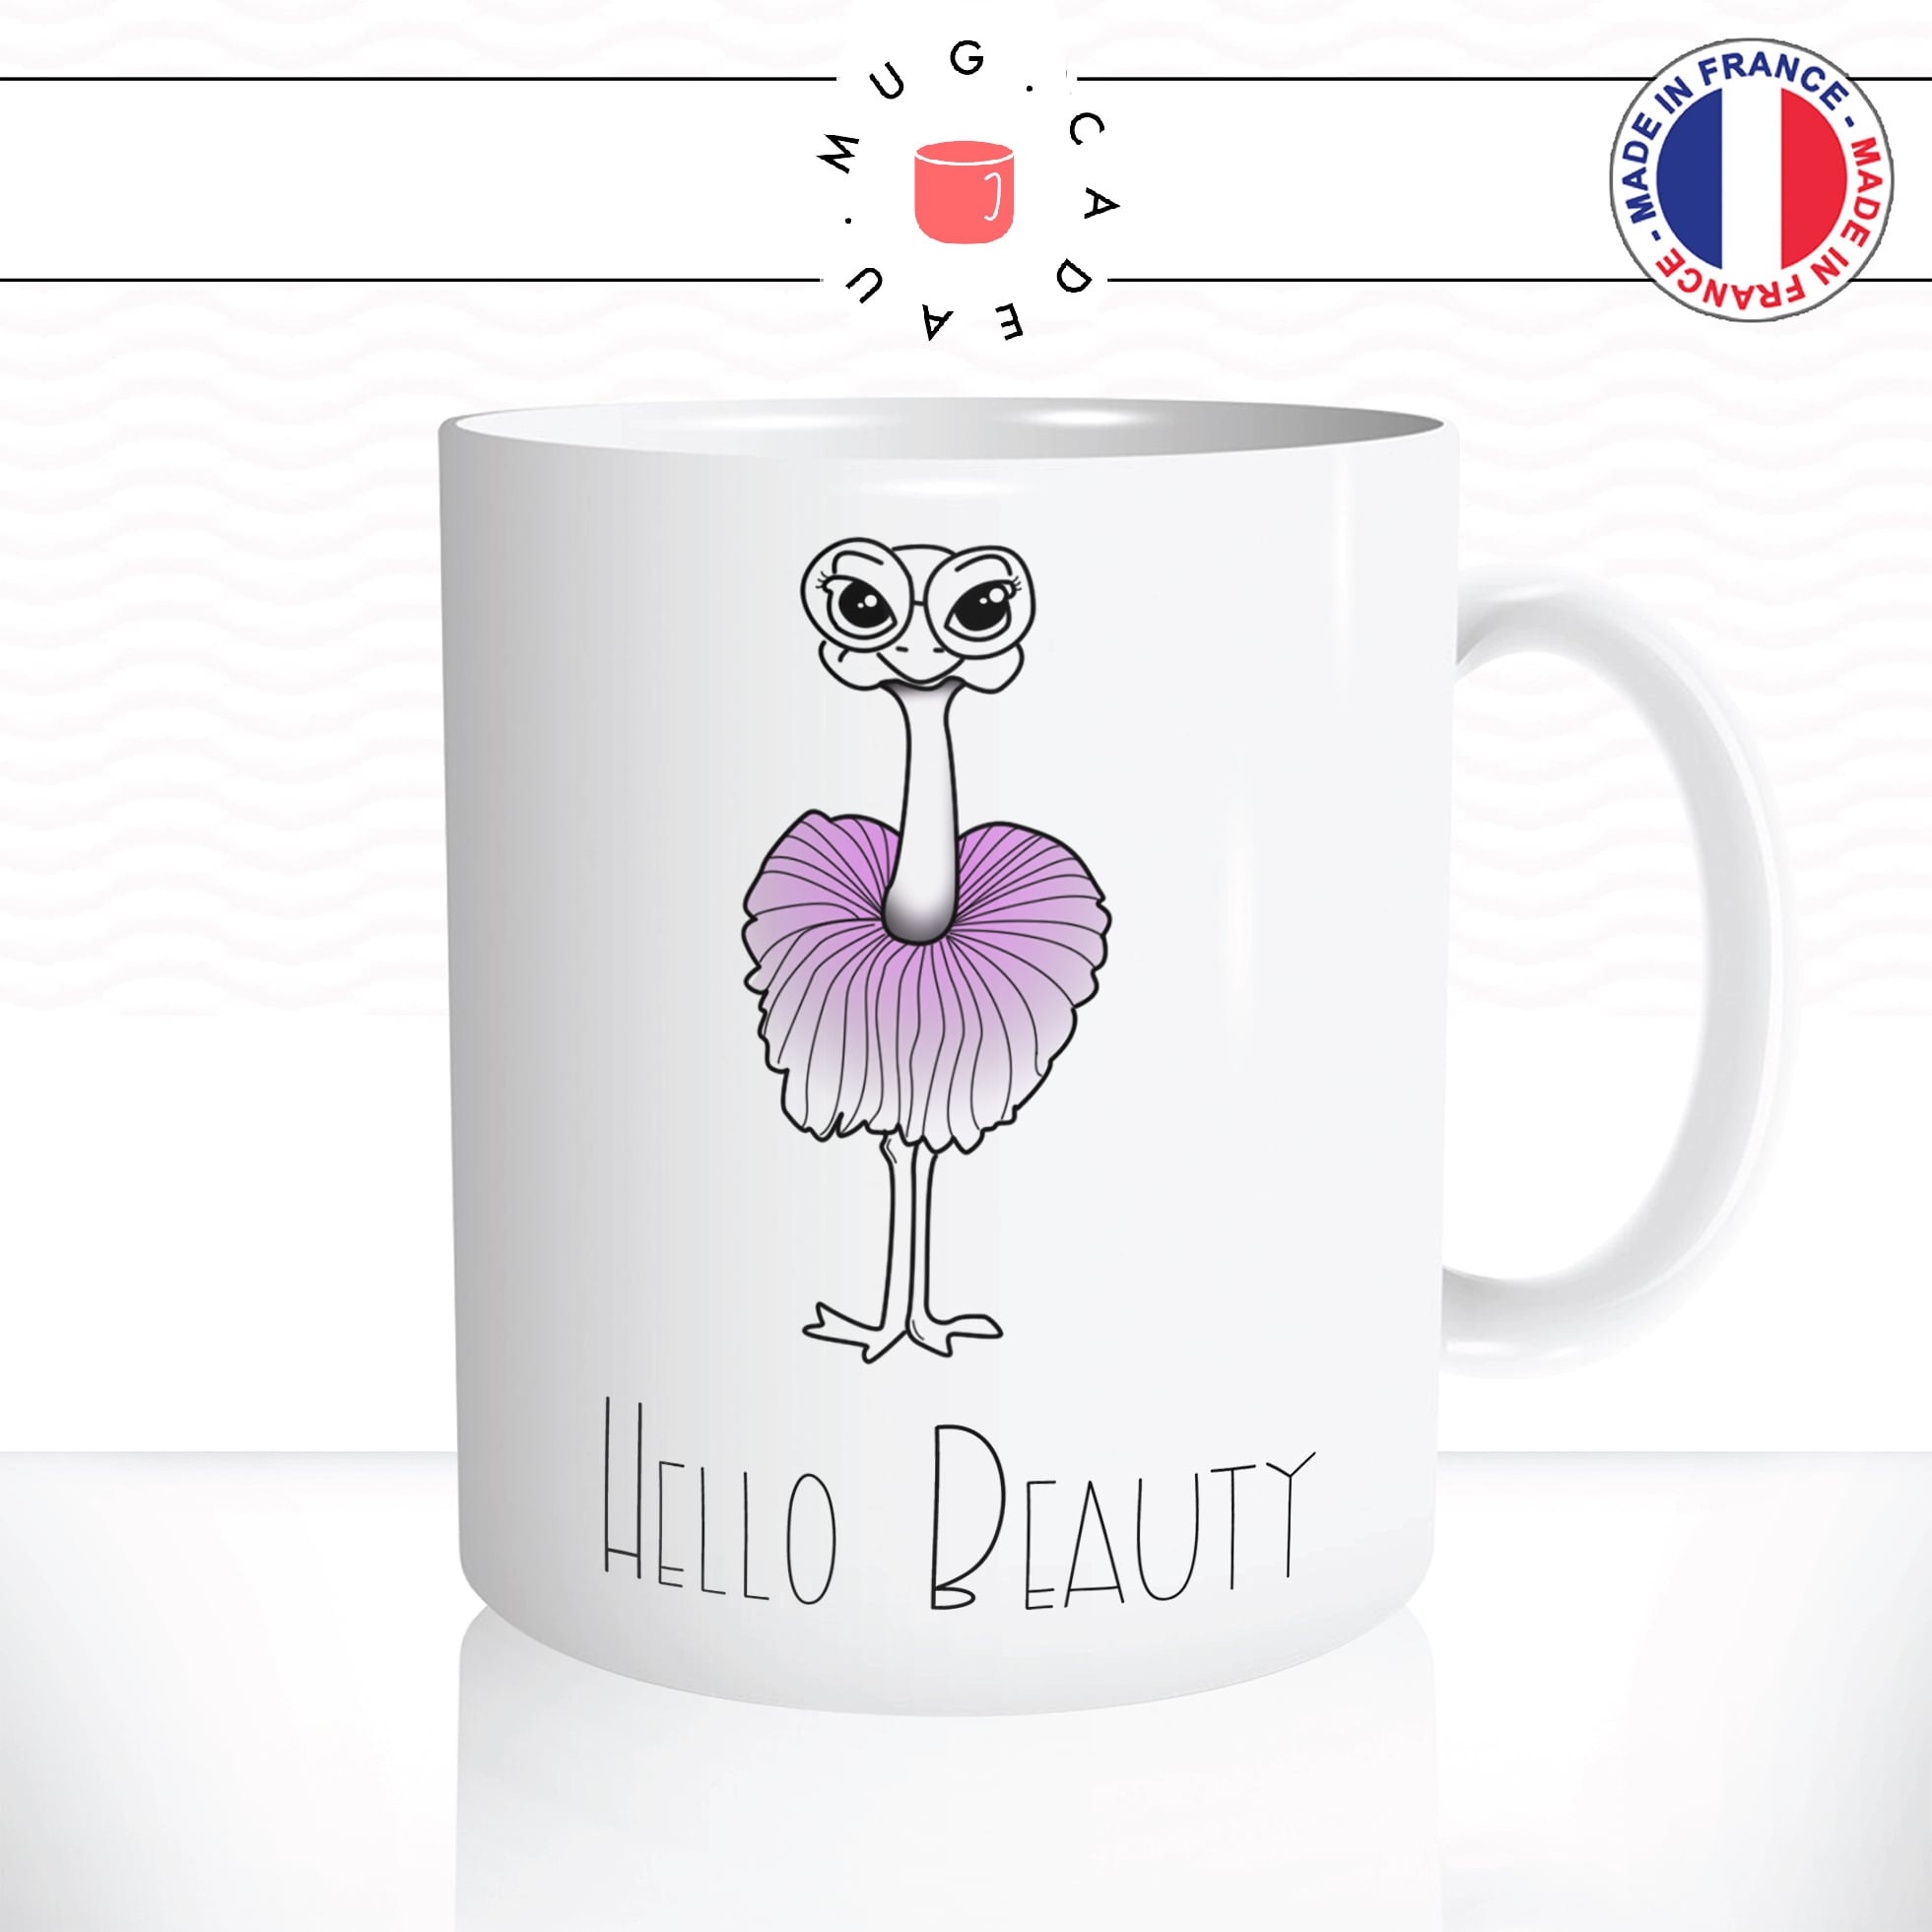 mug-tasse-ref2-animal-autruche-rose-hello-beauty-cafe-the-mugs-tasses-personnalise-anse-droite-min